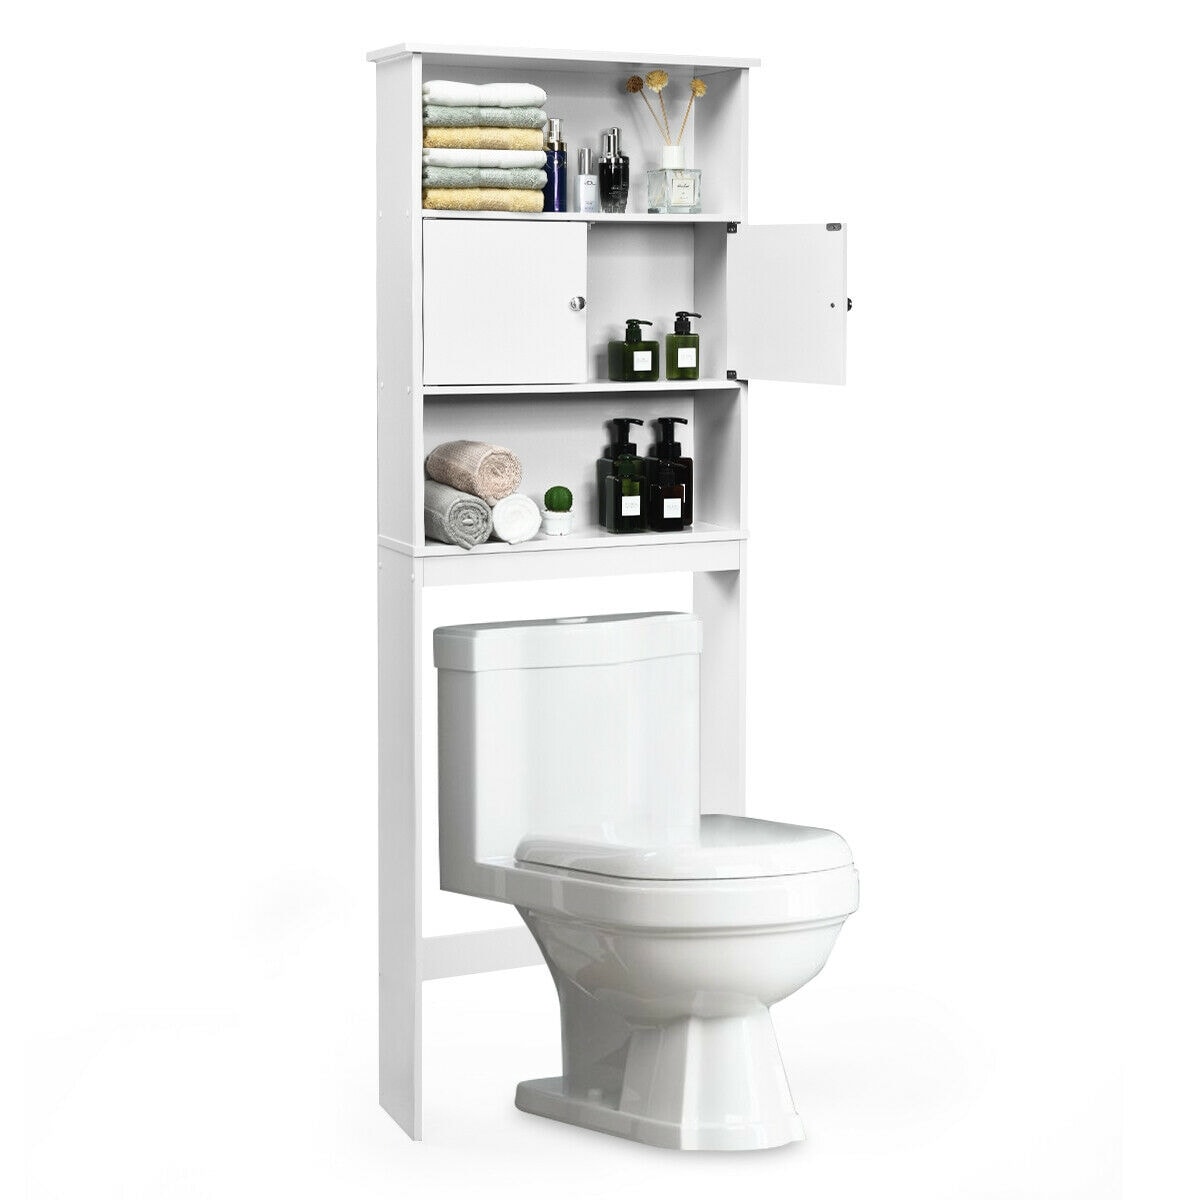 Luxury wood bathroom space saver Gymax Bathroom Wood Organizer Shelf Over The Toilet Storage Rack On Sale Overstock 29556548